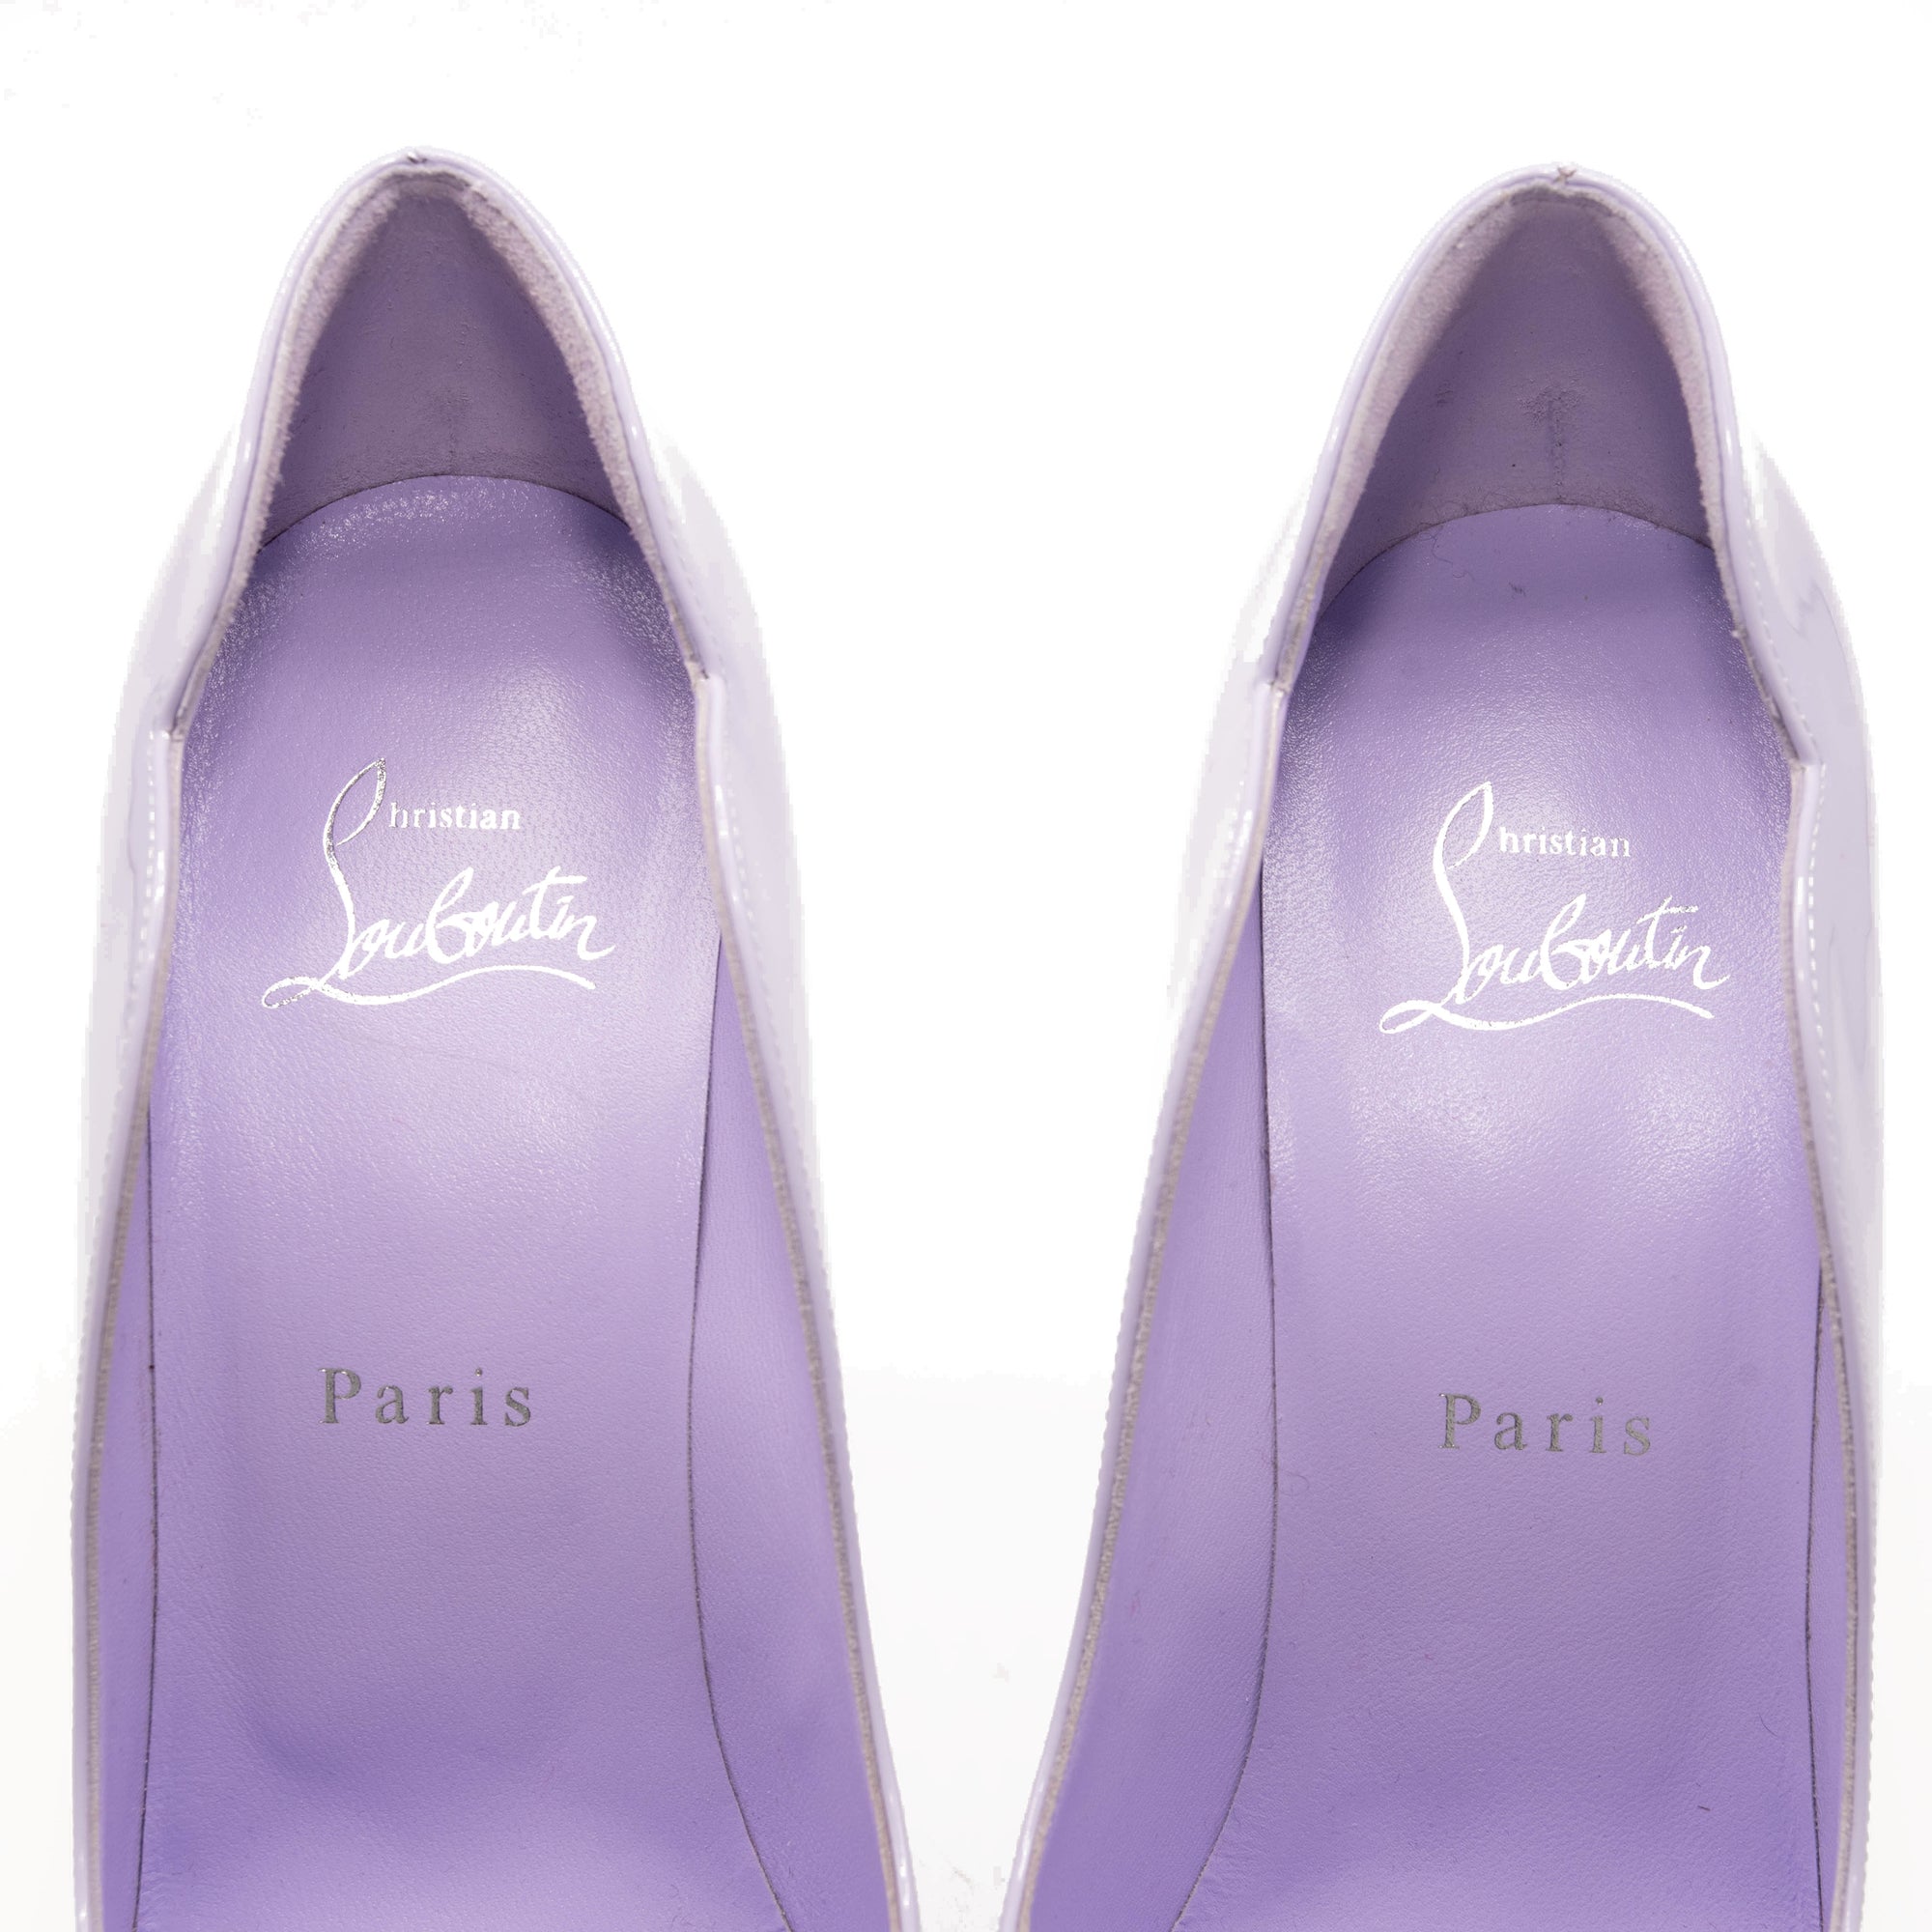 Christian Louboutin CHICK QUEEN Scallop Iridescent Jewel Heels Pumps Shoes  $1395